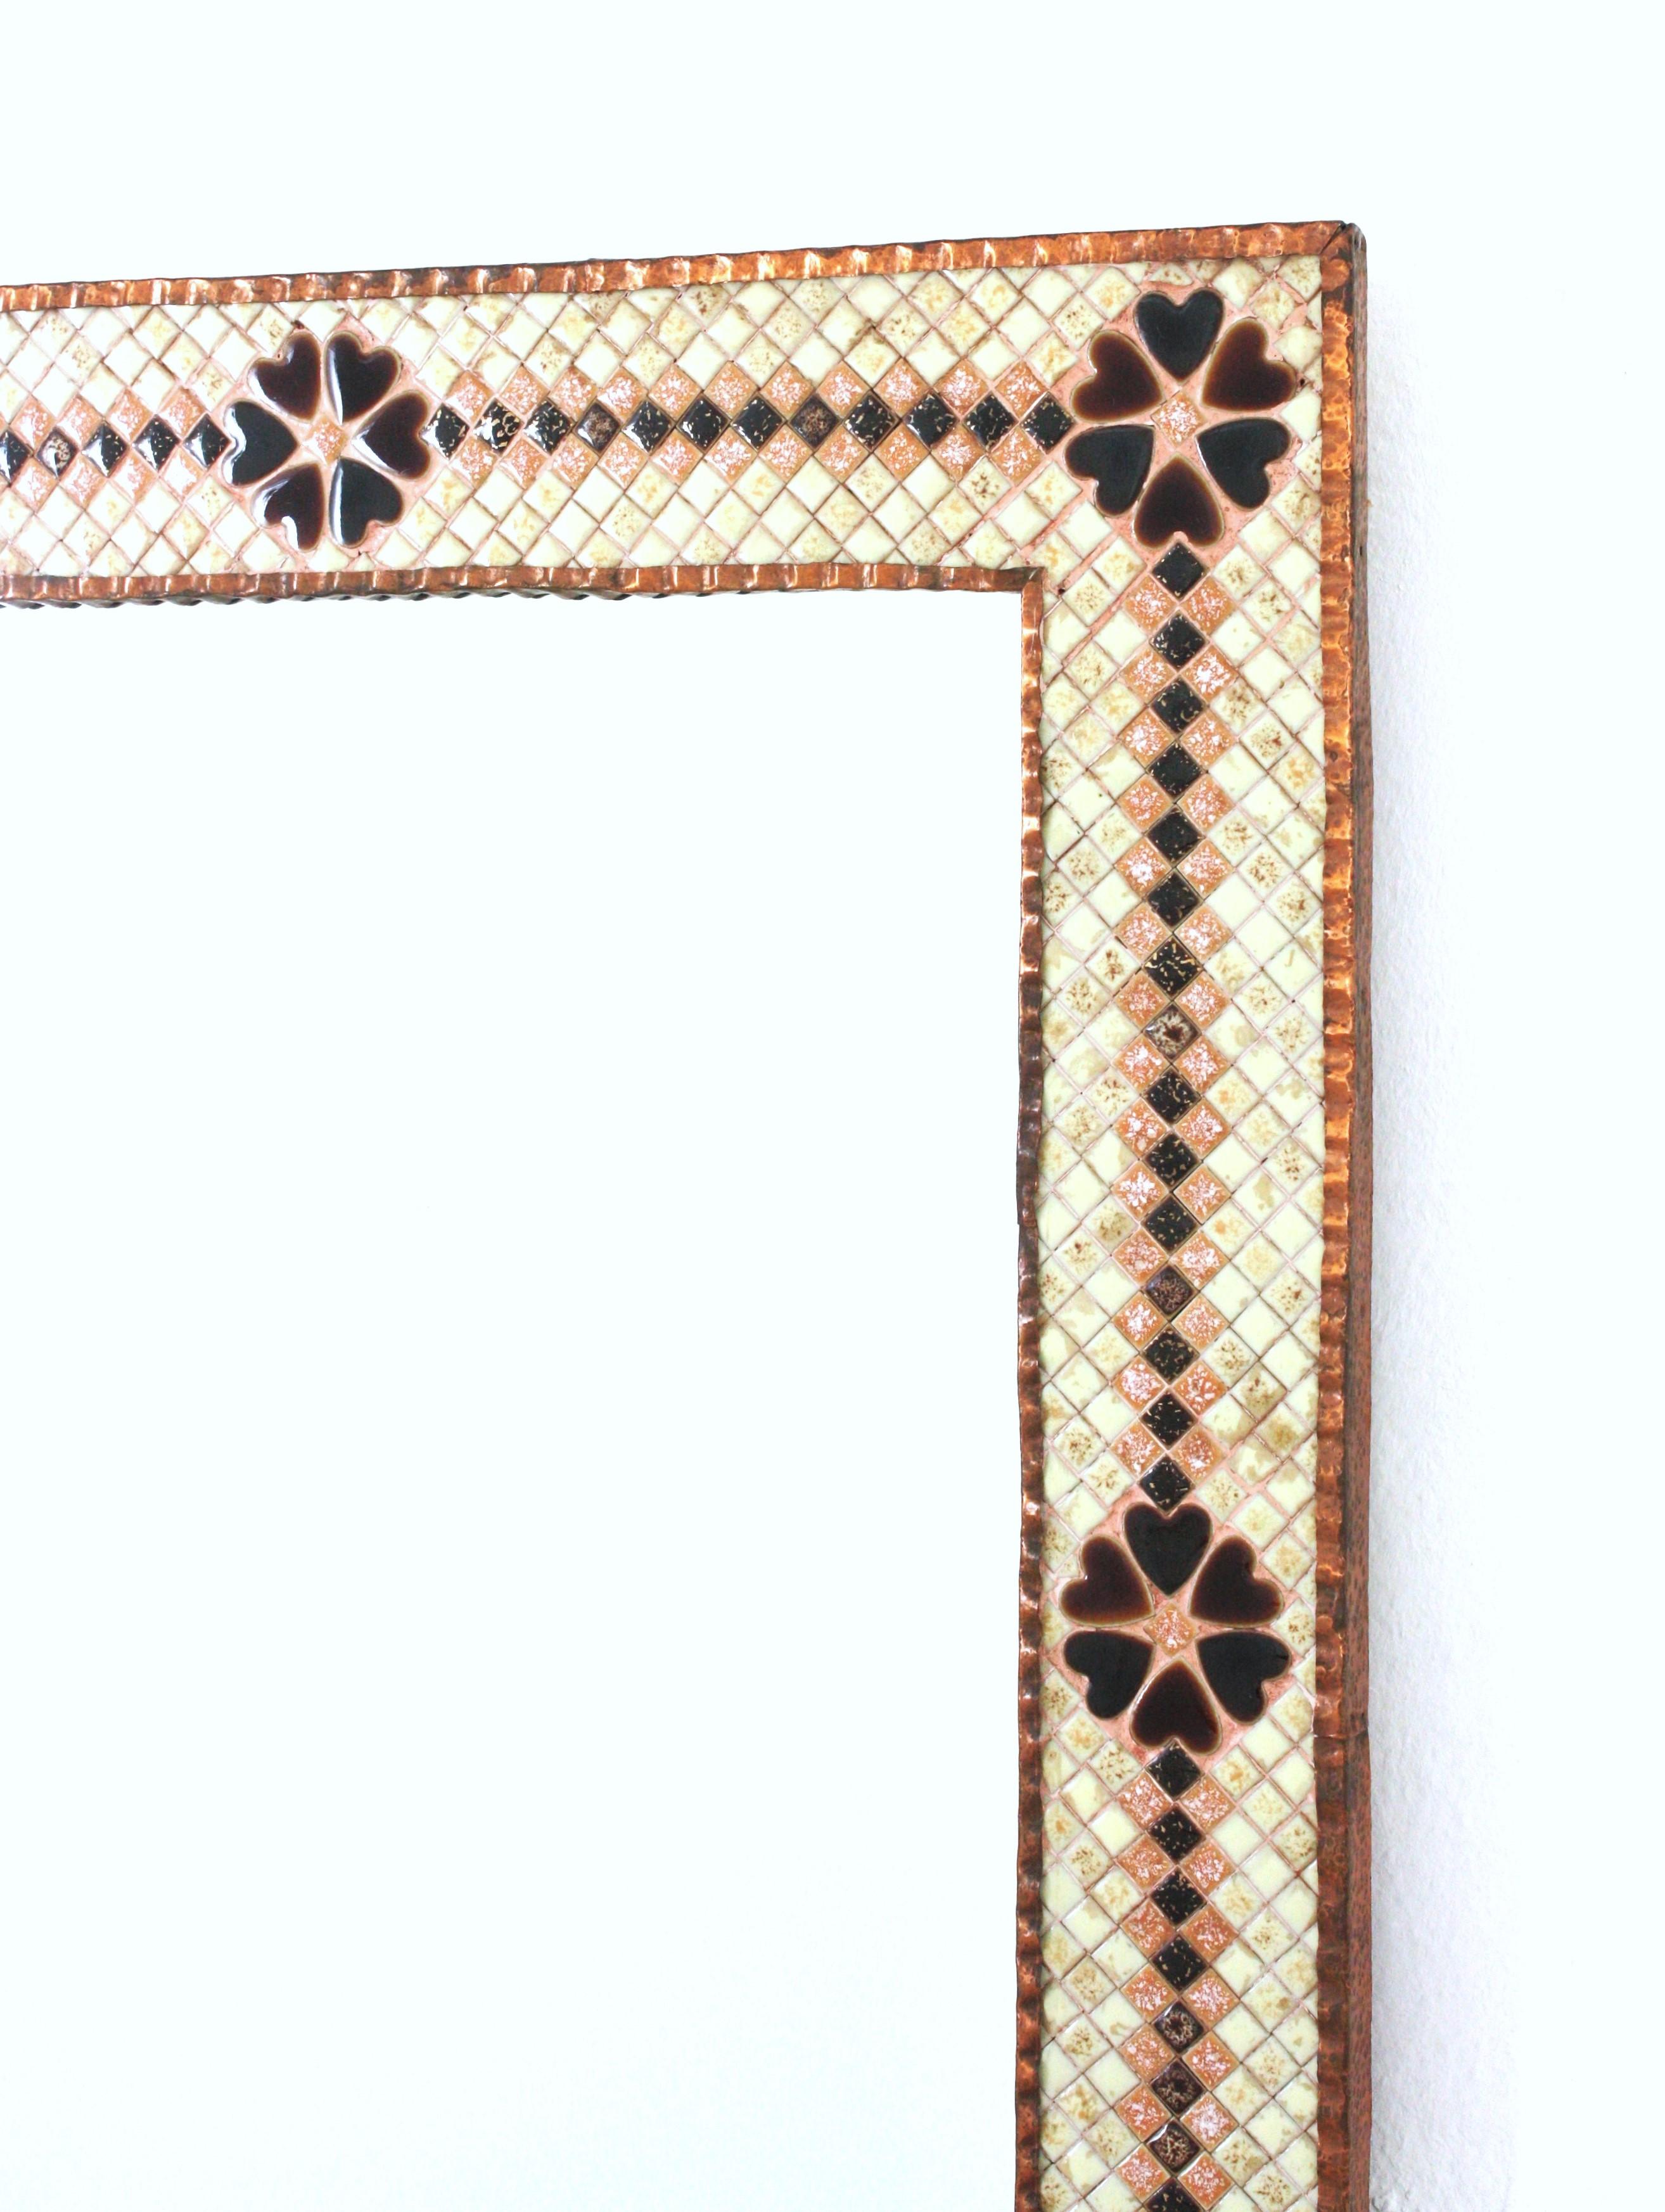 Spanish Tile Mosaic Rectangular Mirror in Glazed Ceramic, 1950s For Sale 3